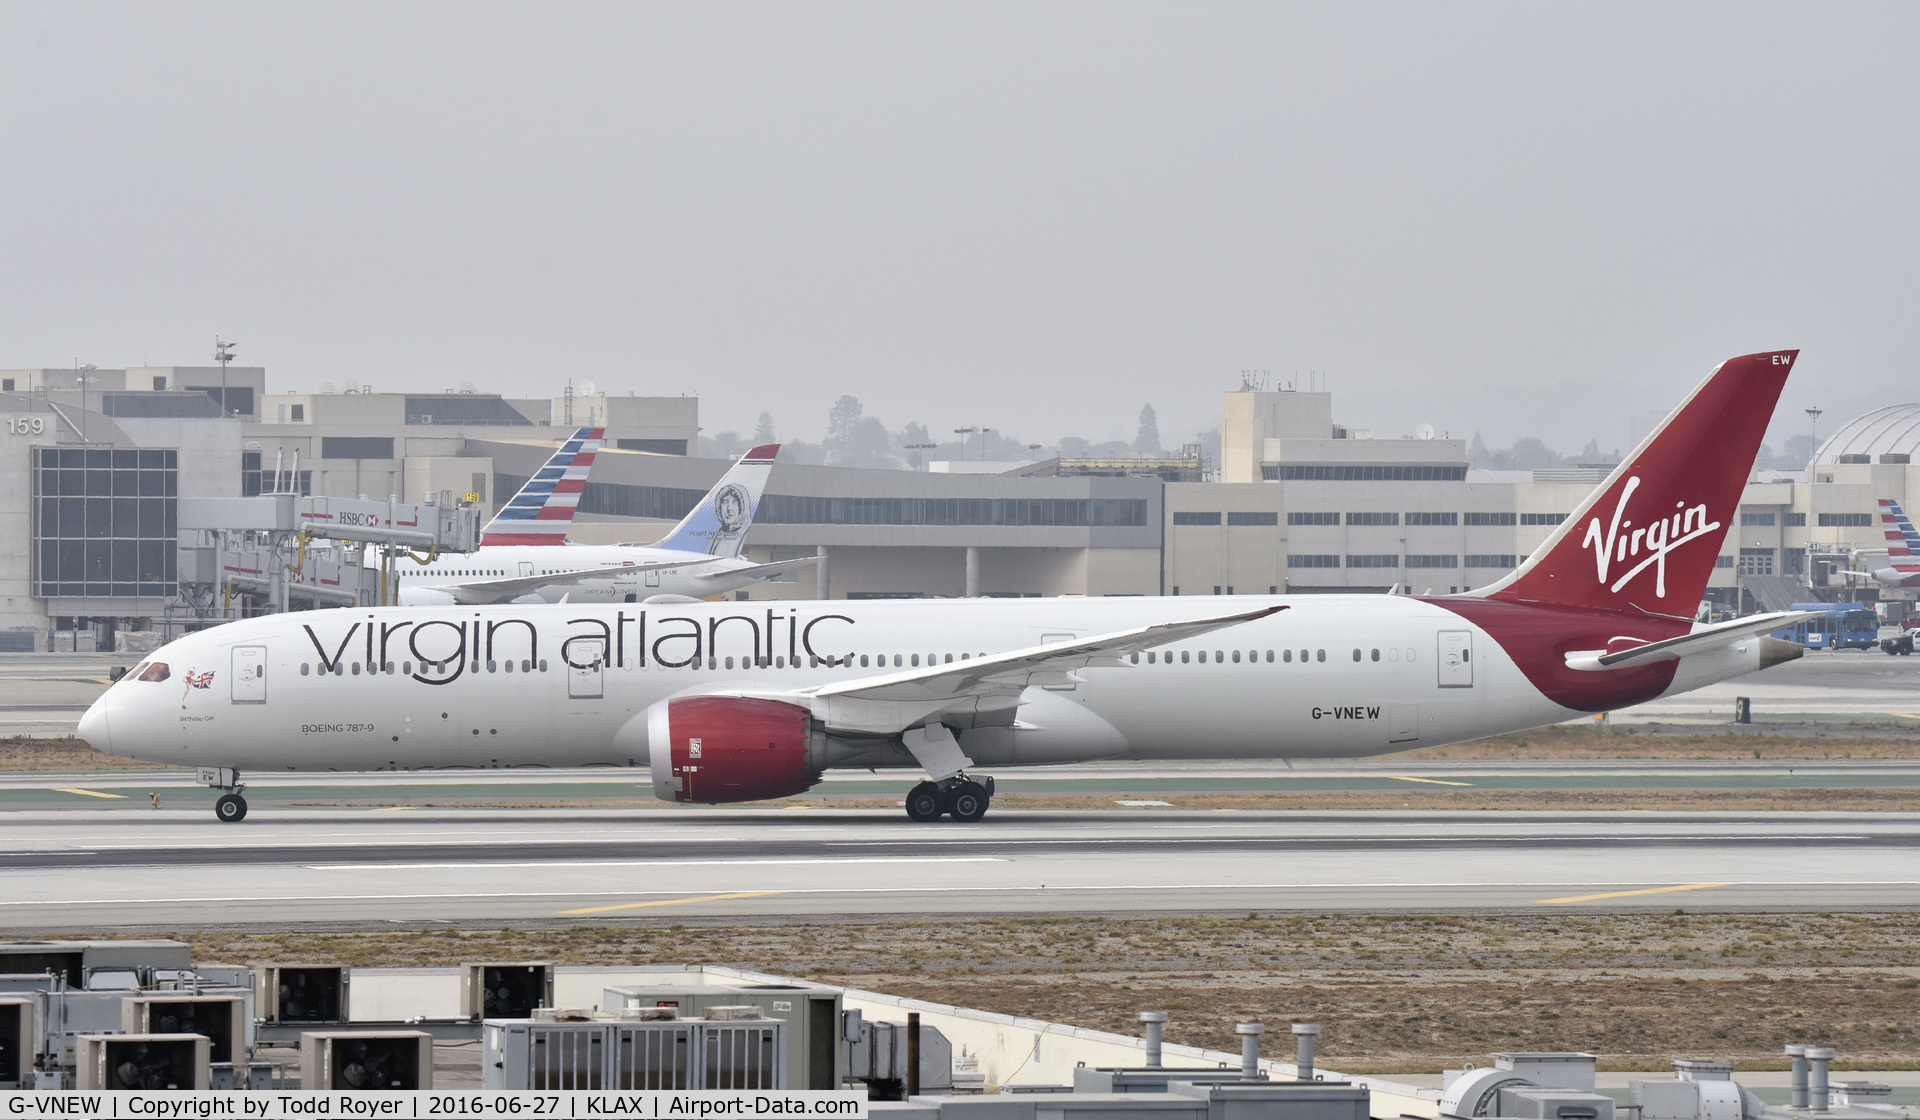 G-VNEW, 2014 Boeing 787-9 Dreamliner C/N 40956, Arriving at LAX